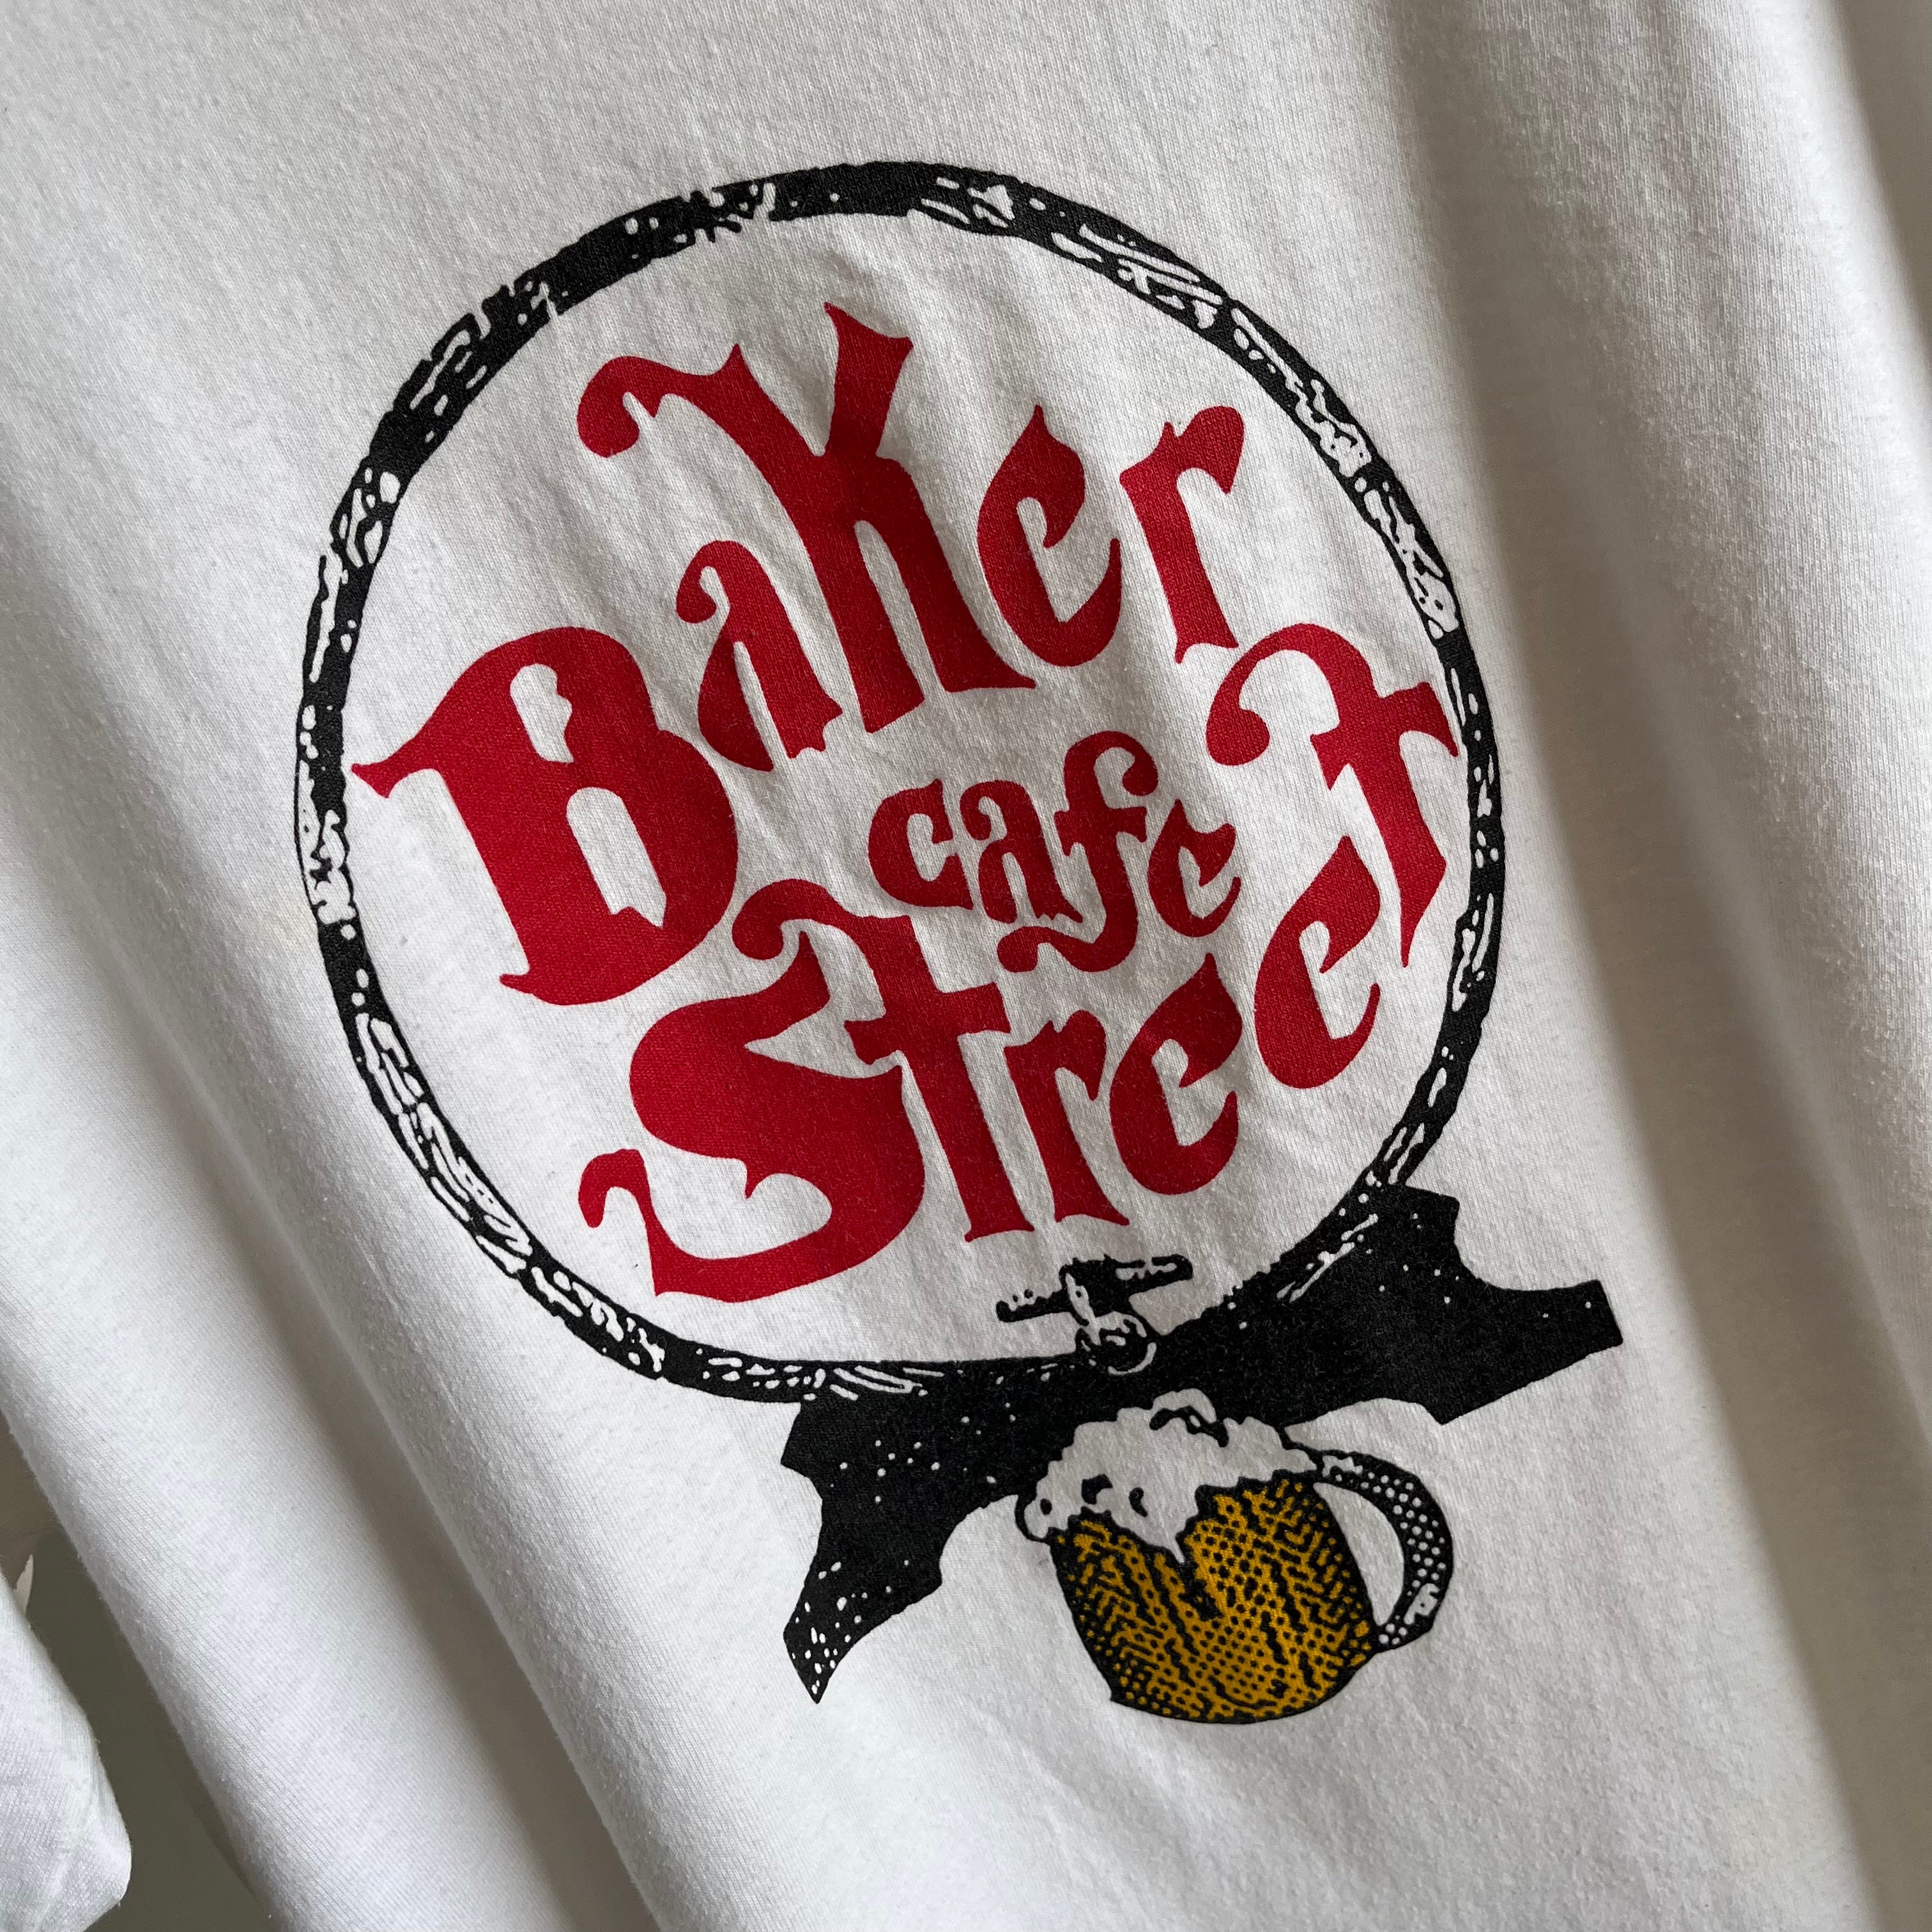 T-shirt Baker Street Cafe des années 1980